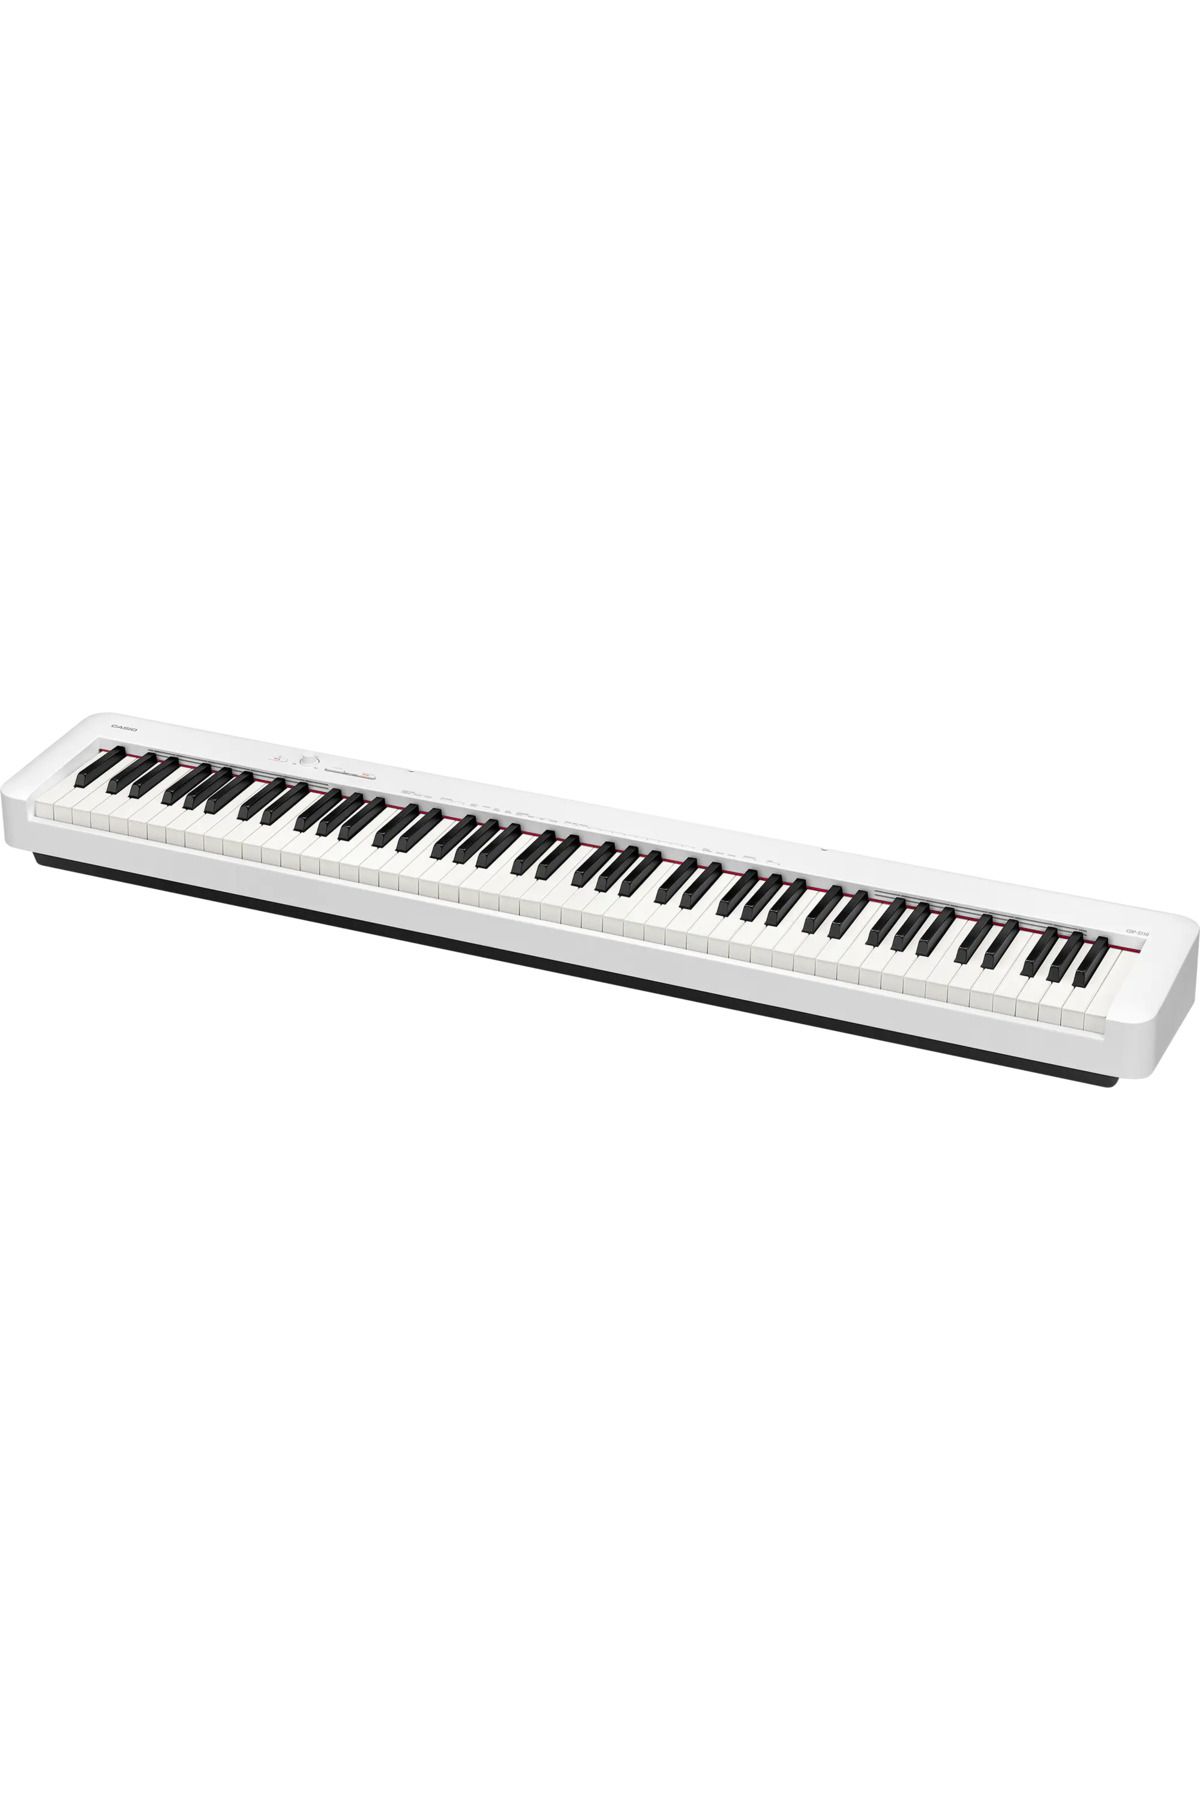 Casio Cdp-s110wec2 Beyaz Taşınabilir Dijital Piyano